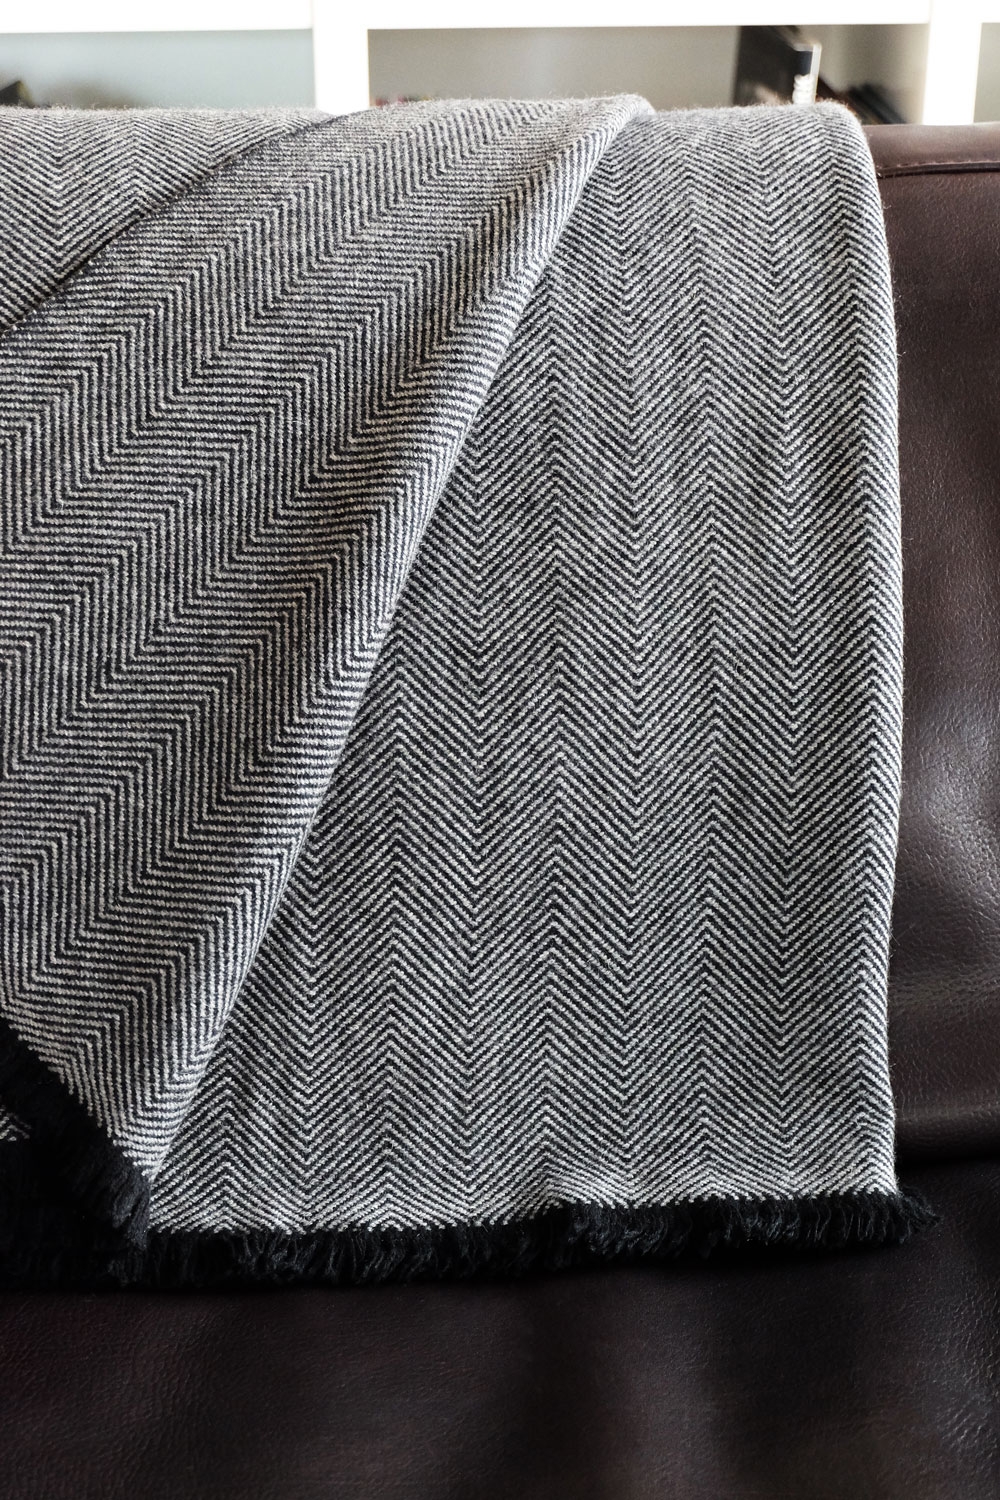 Cashmere accessories cocooning erable 130 x 190 black grey marl 130 x 190 cm